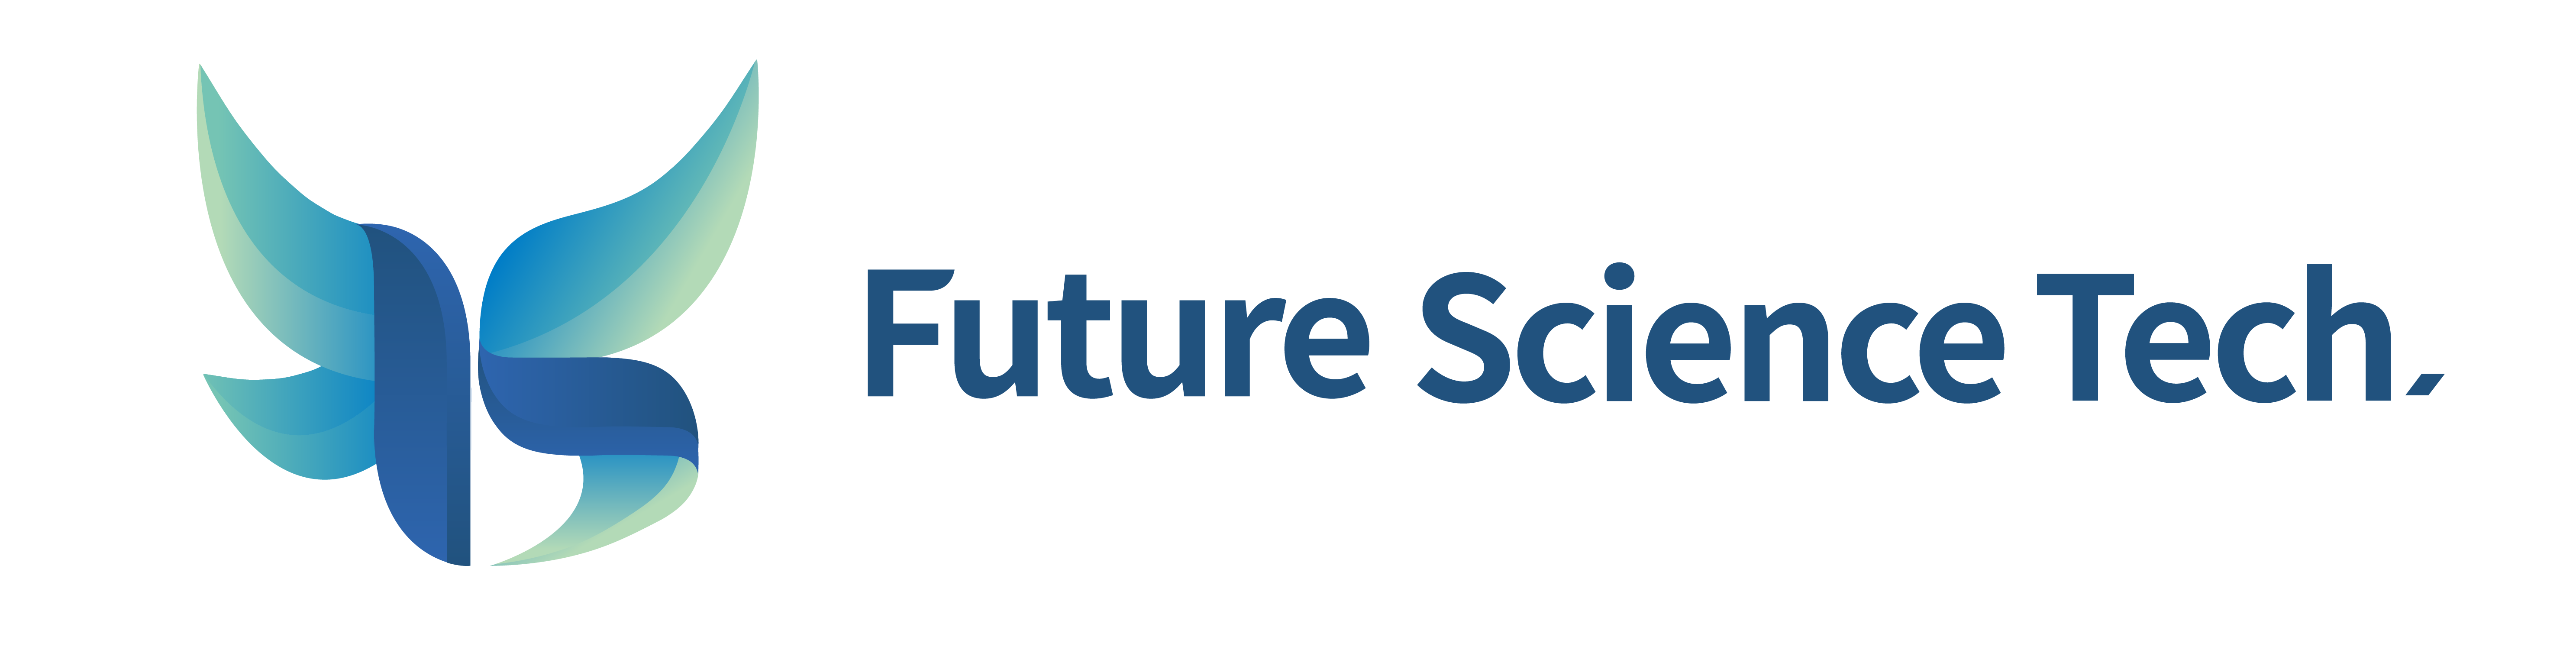 future science tech Co.,Ltd logo image